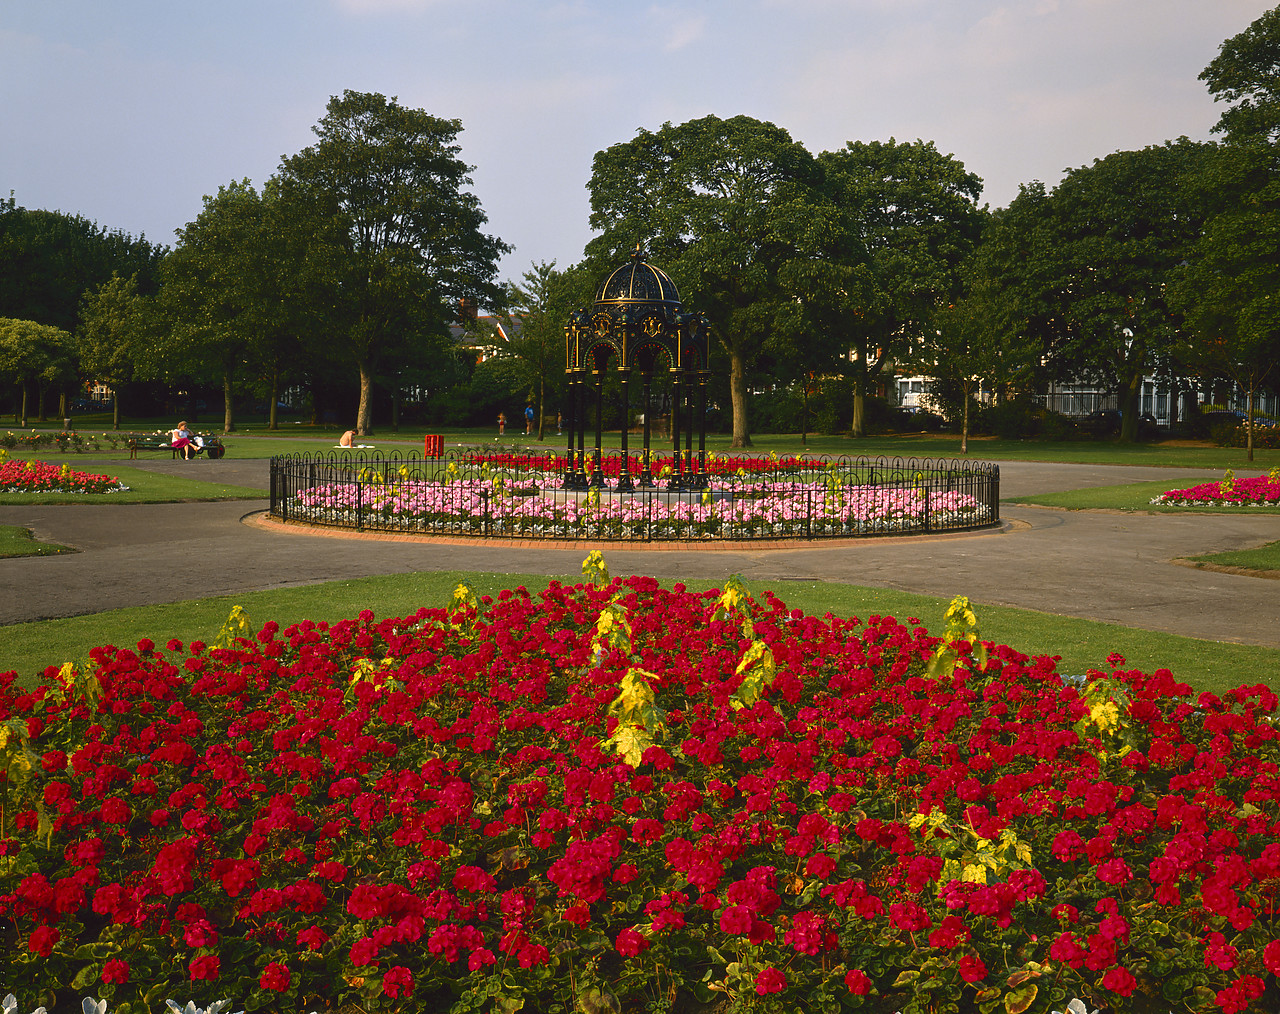 #903009 - Gardens at Victoria Park, Cardiff, South Glamorgan, Wales